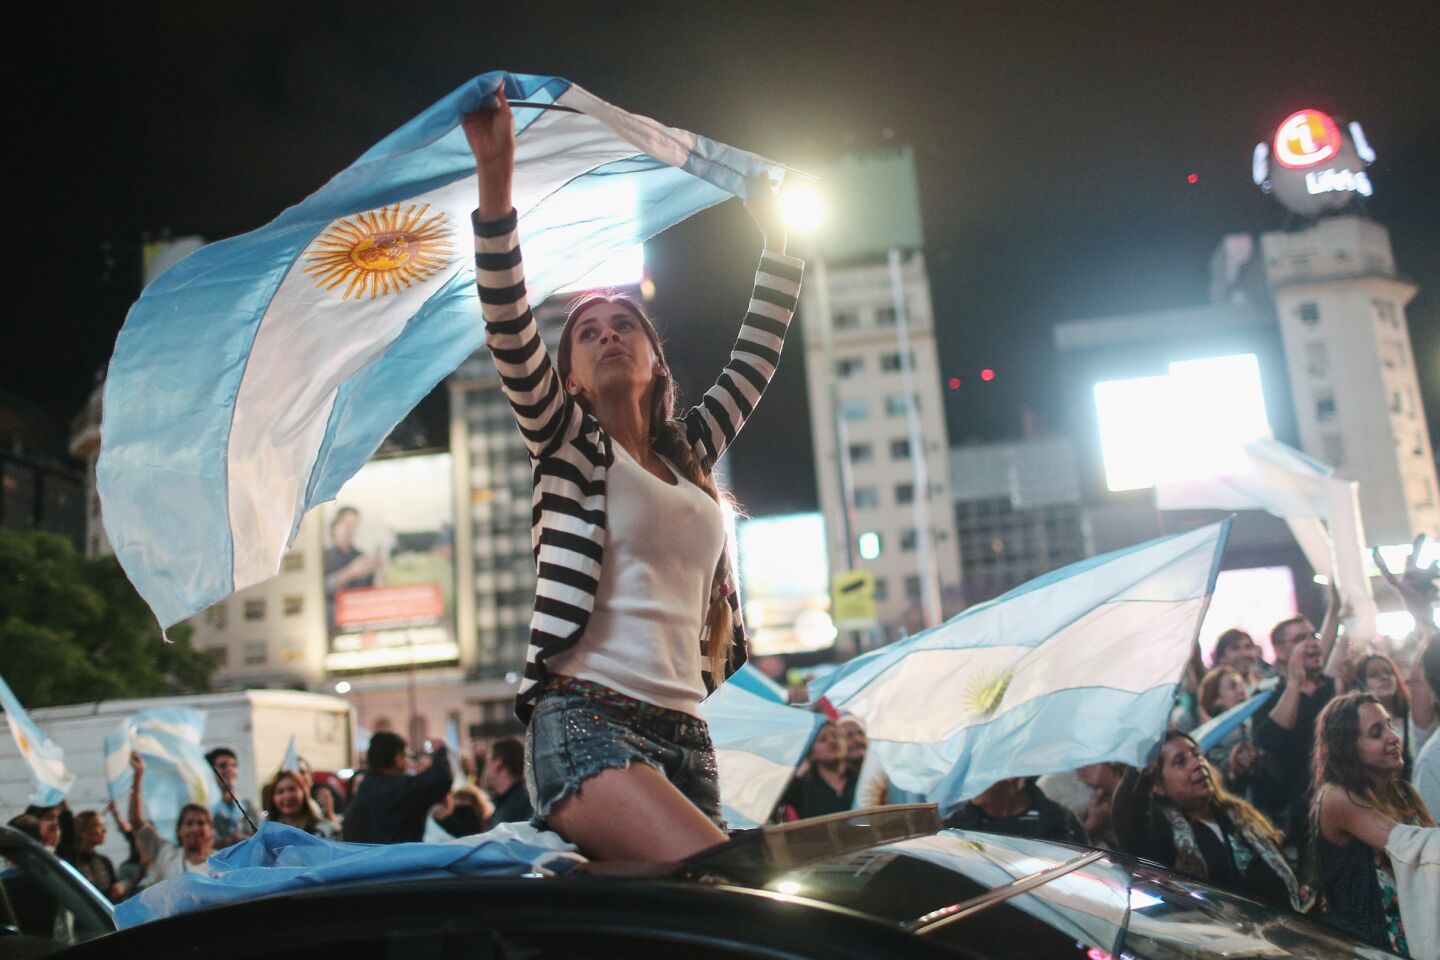 Mauricio Macri elected president of Argentina